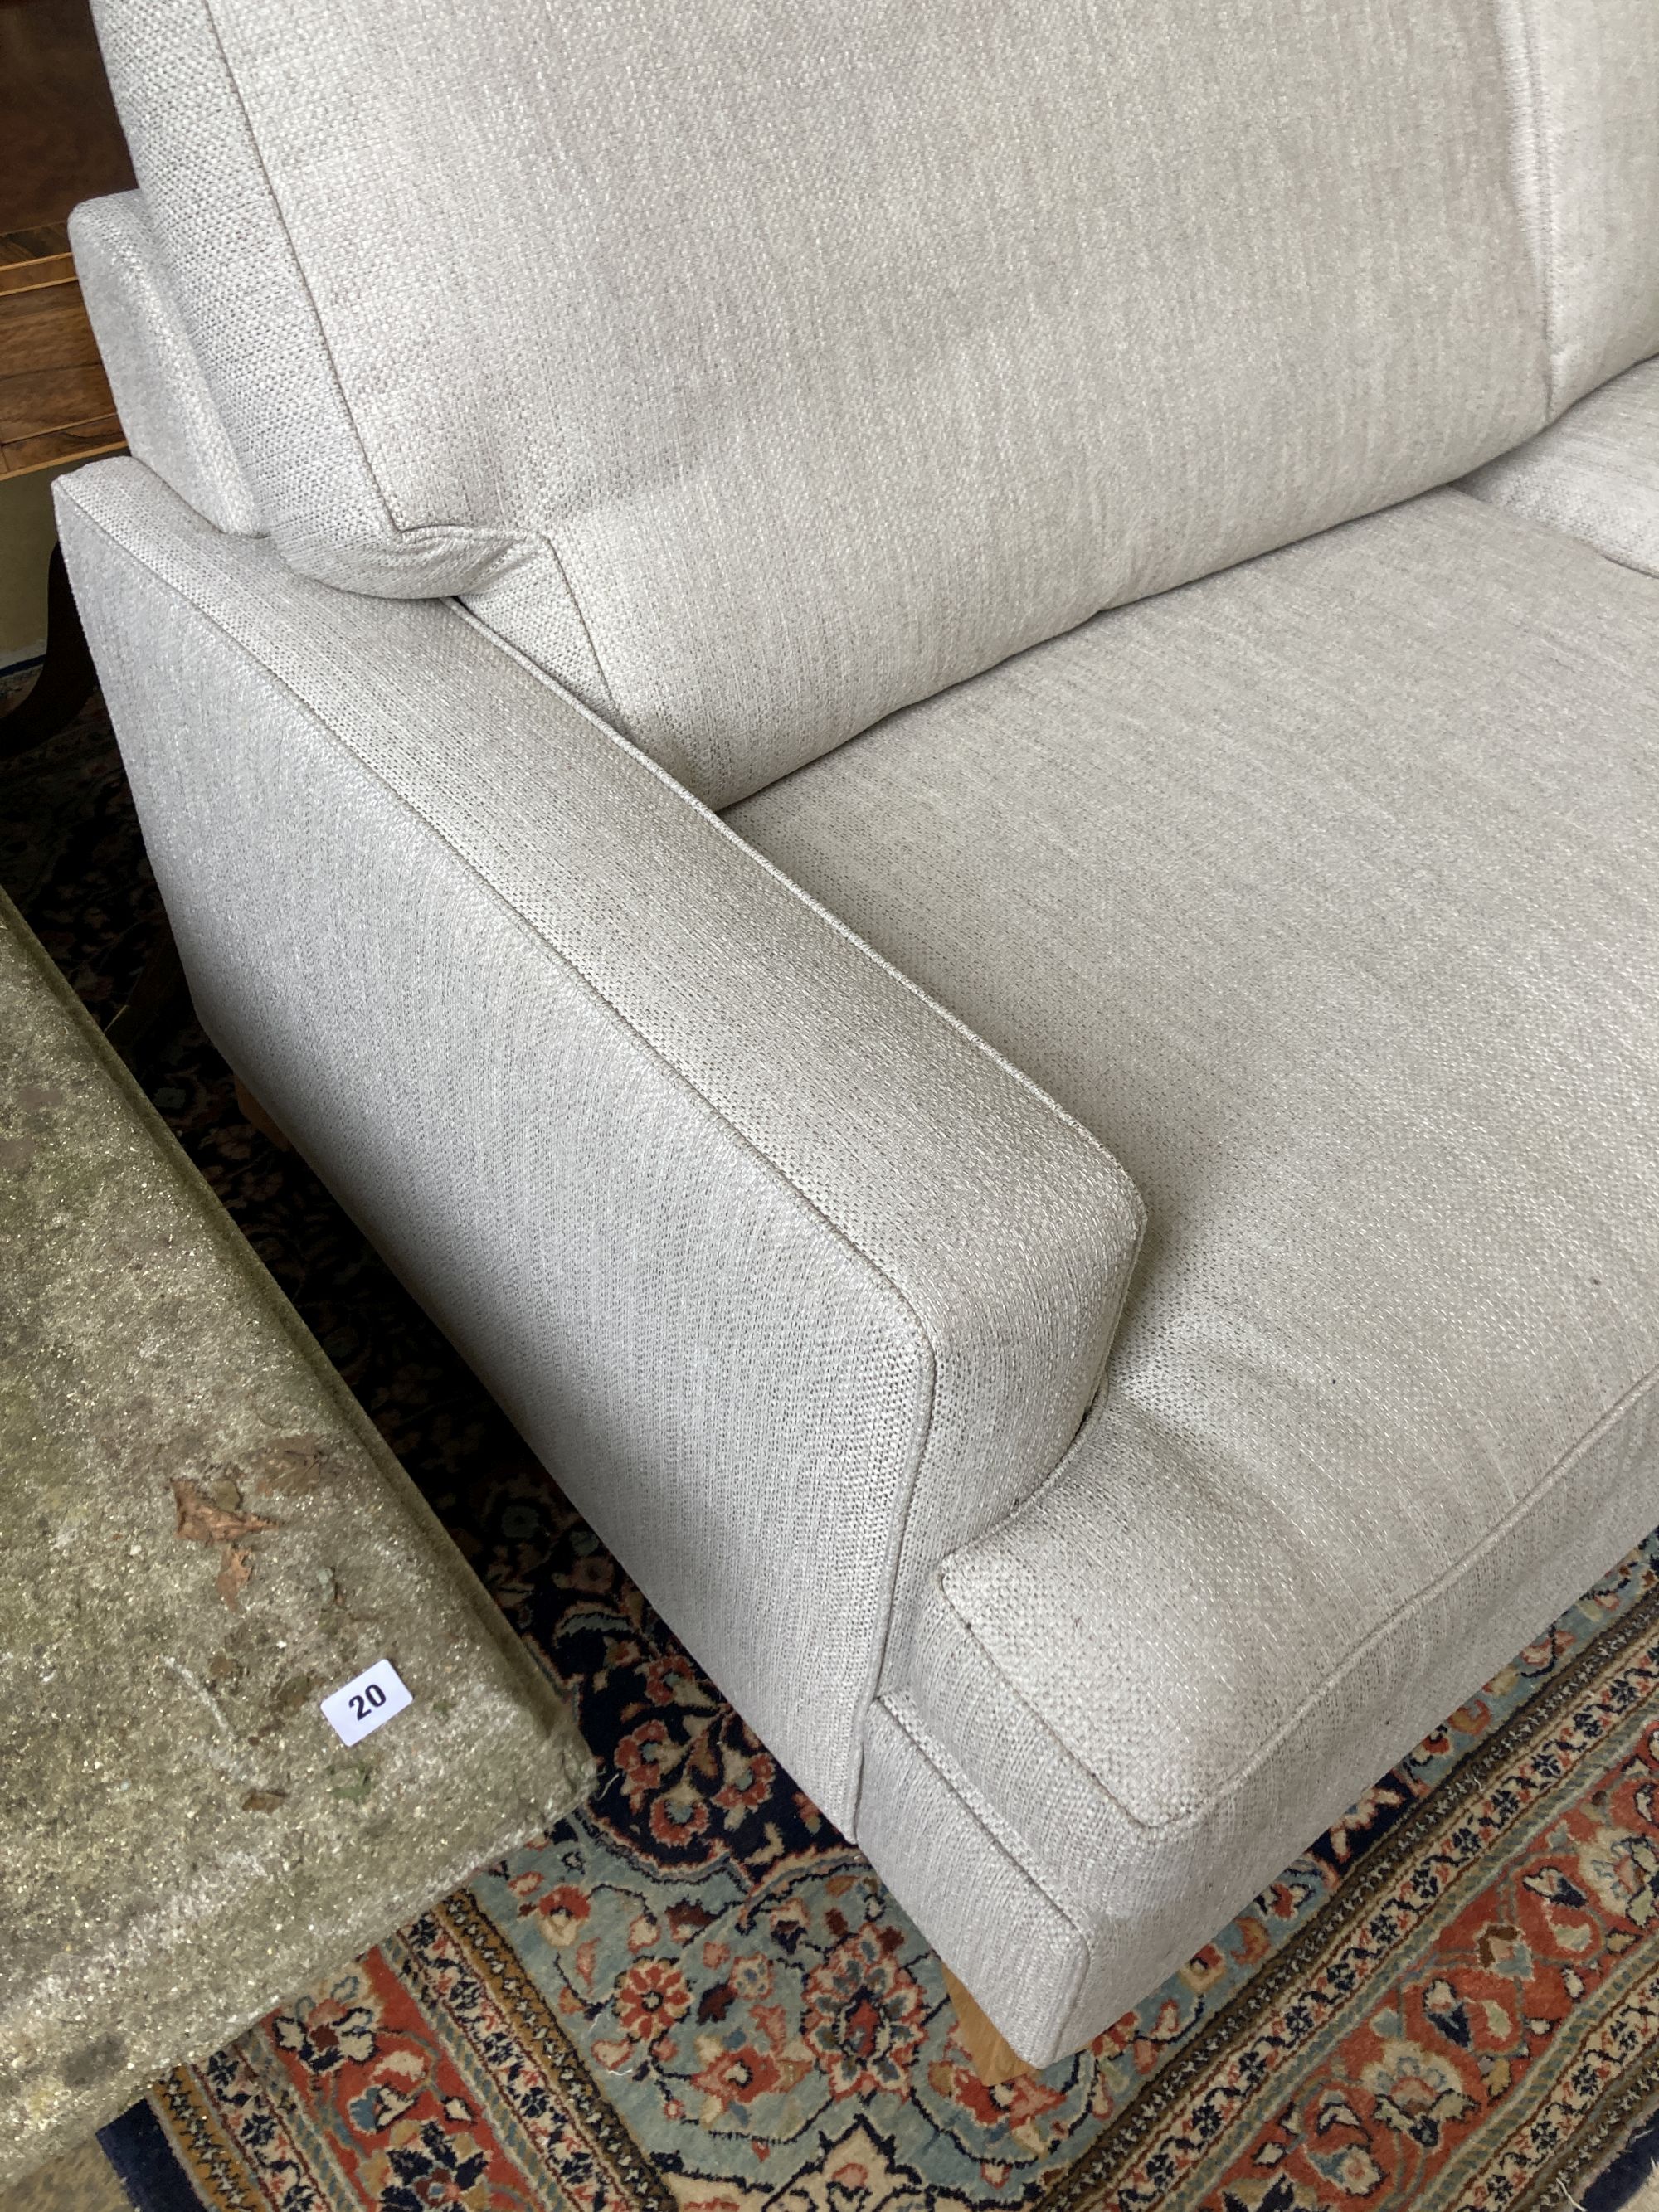 A modern contemporary two-seater sofa, length 206cm, width 102cm, height 98cm